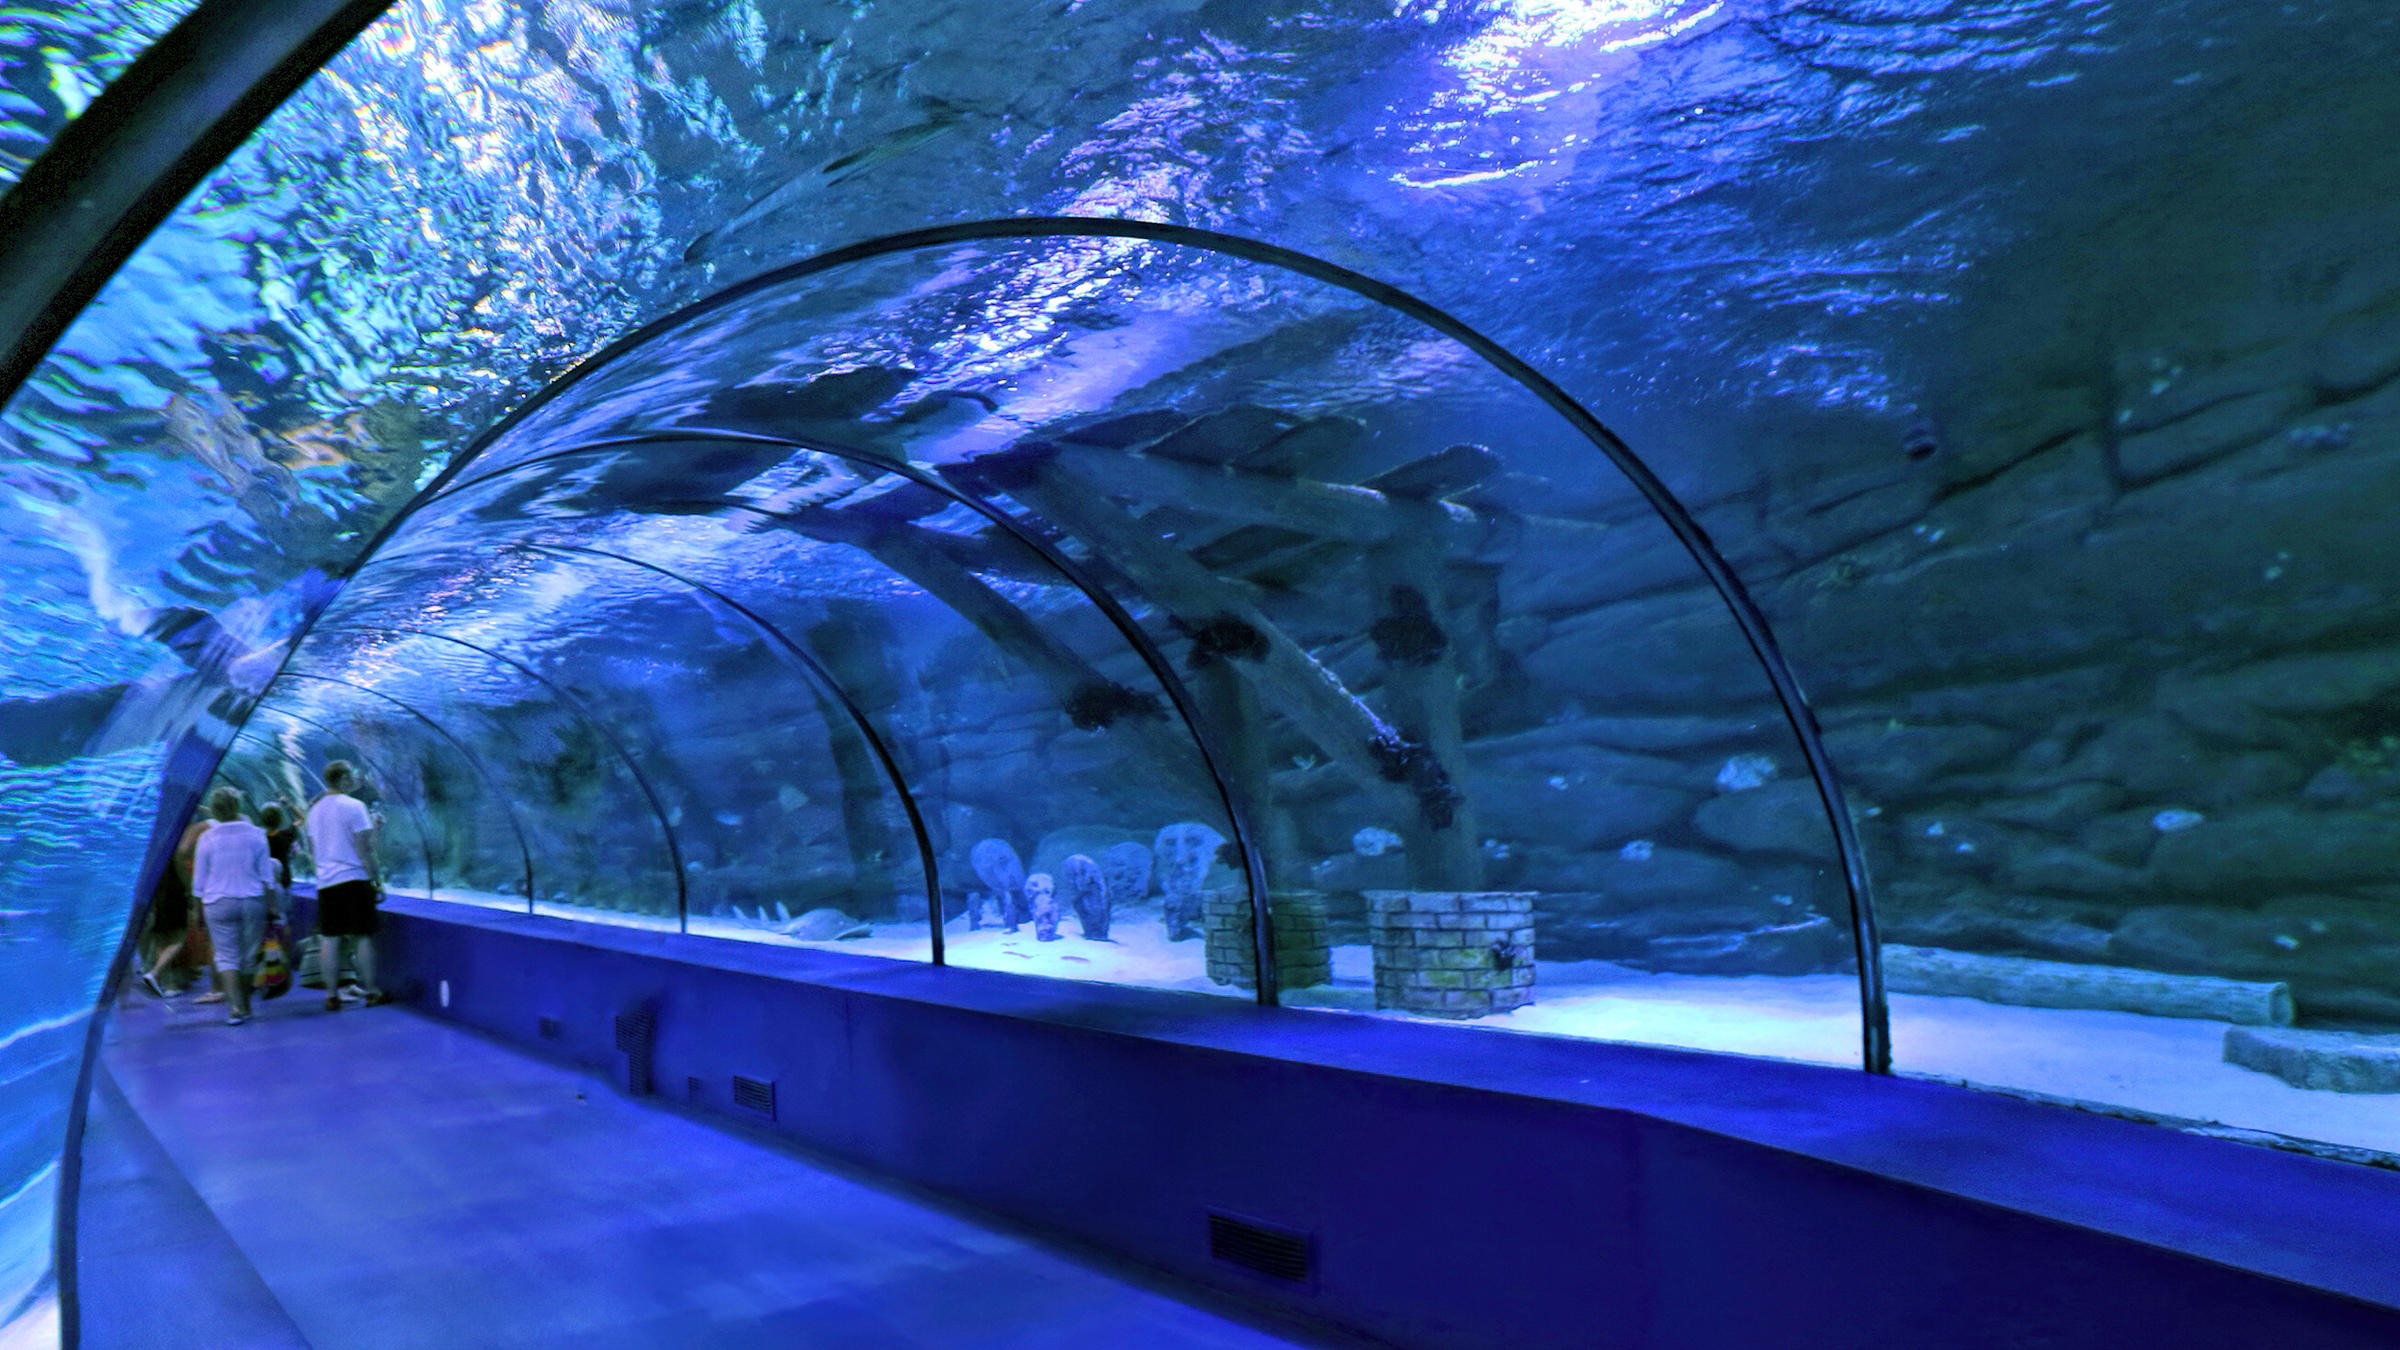 Aquarium from Belek in Antalya